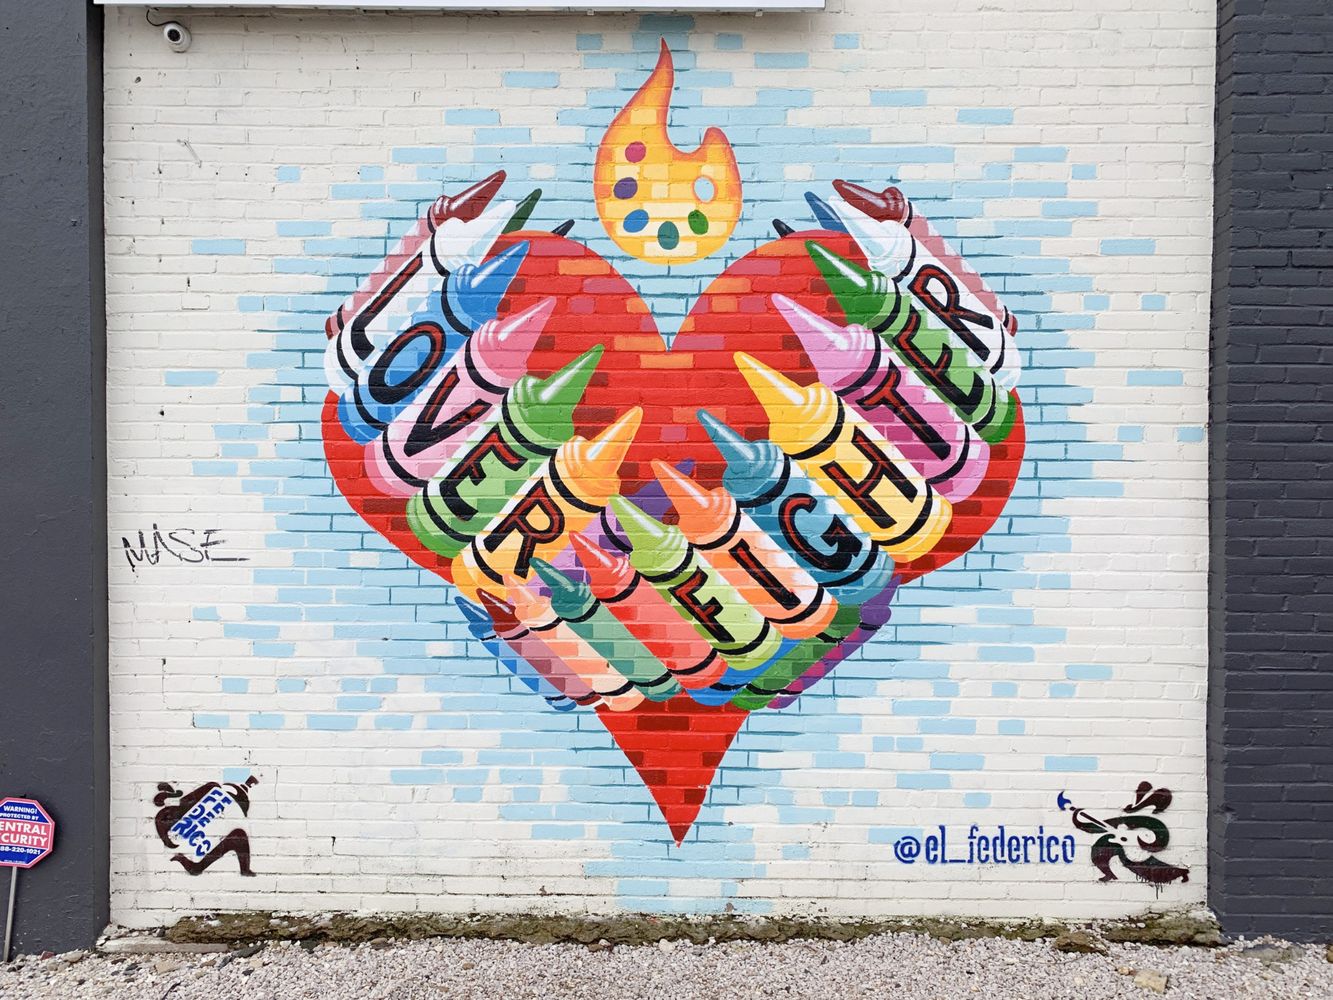 Austin’s Vibrant Public Art Murals